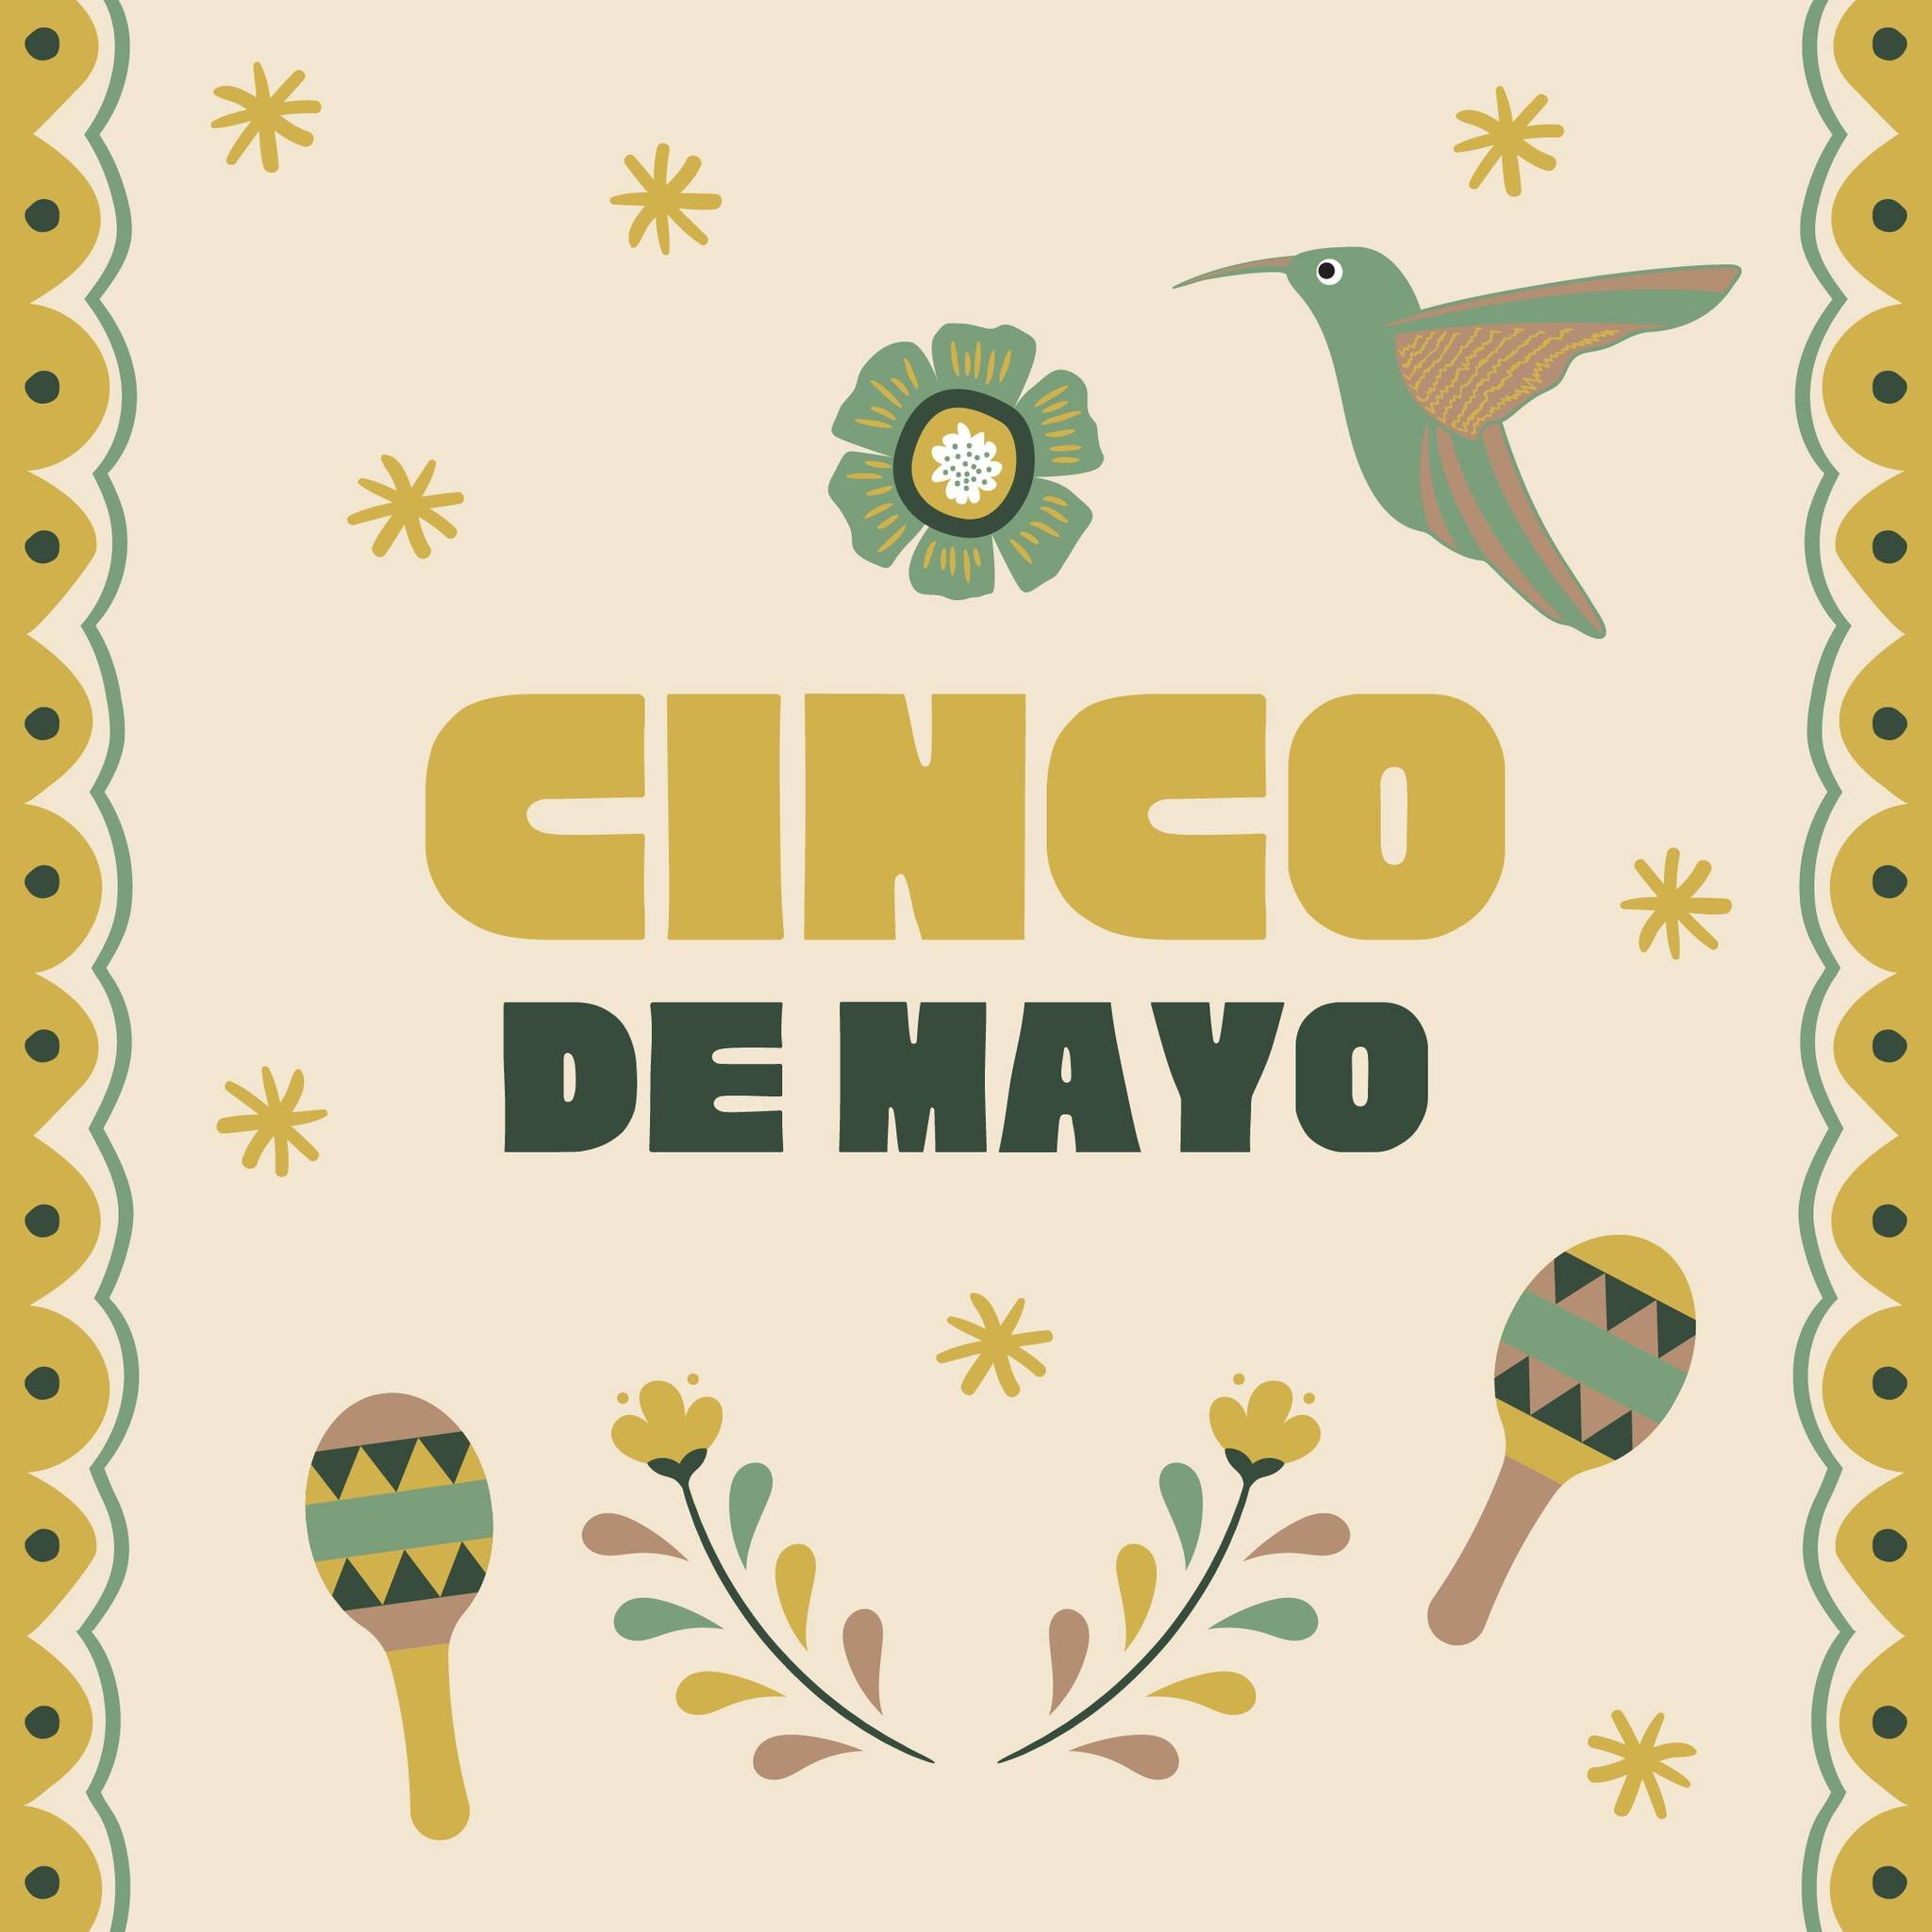 We hope everyone has a fun Cinco de Mayo and enjoys the day. #cincodemayo #cincodemayo2023